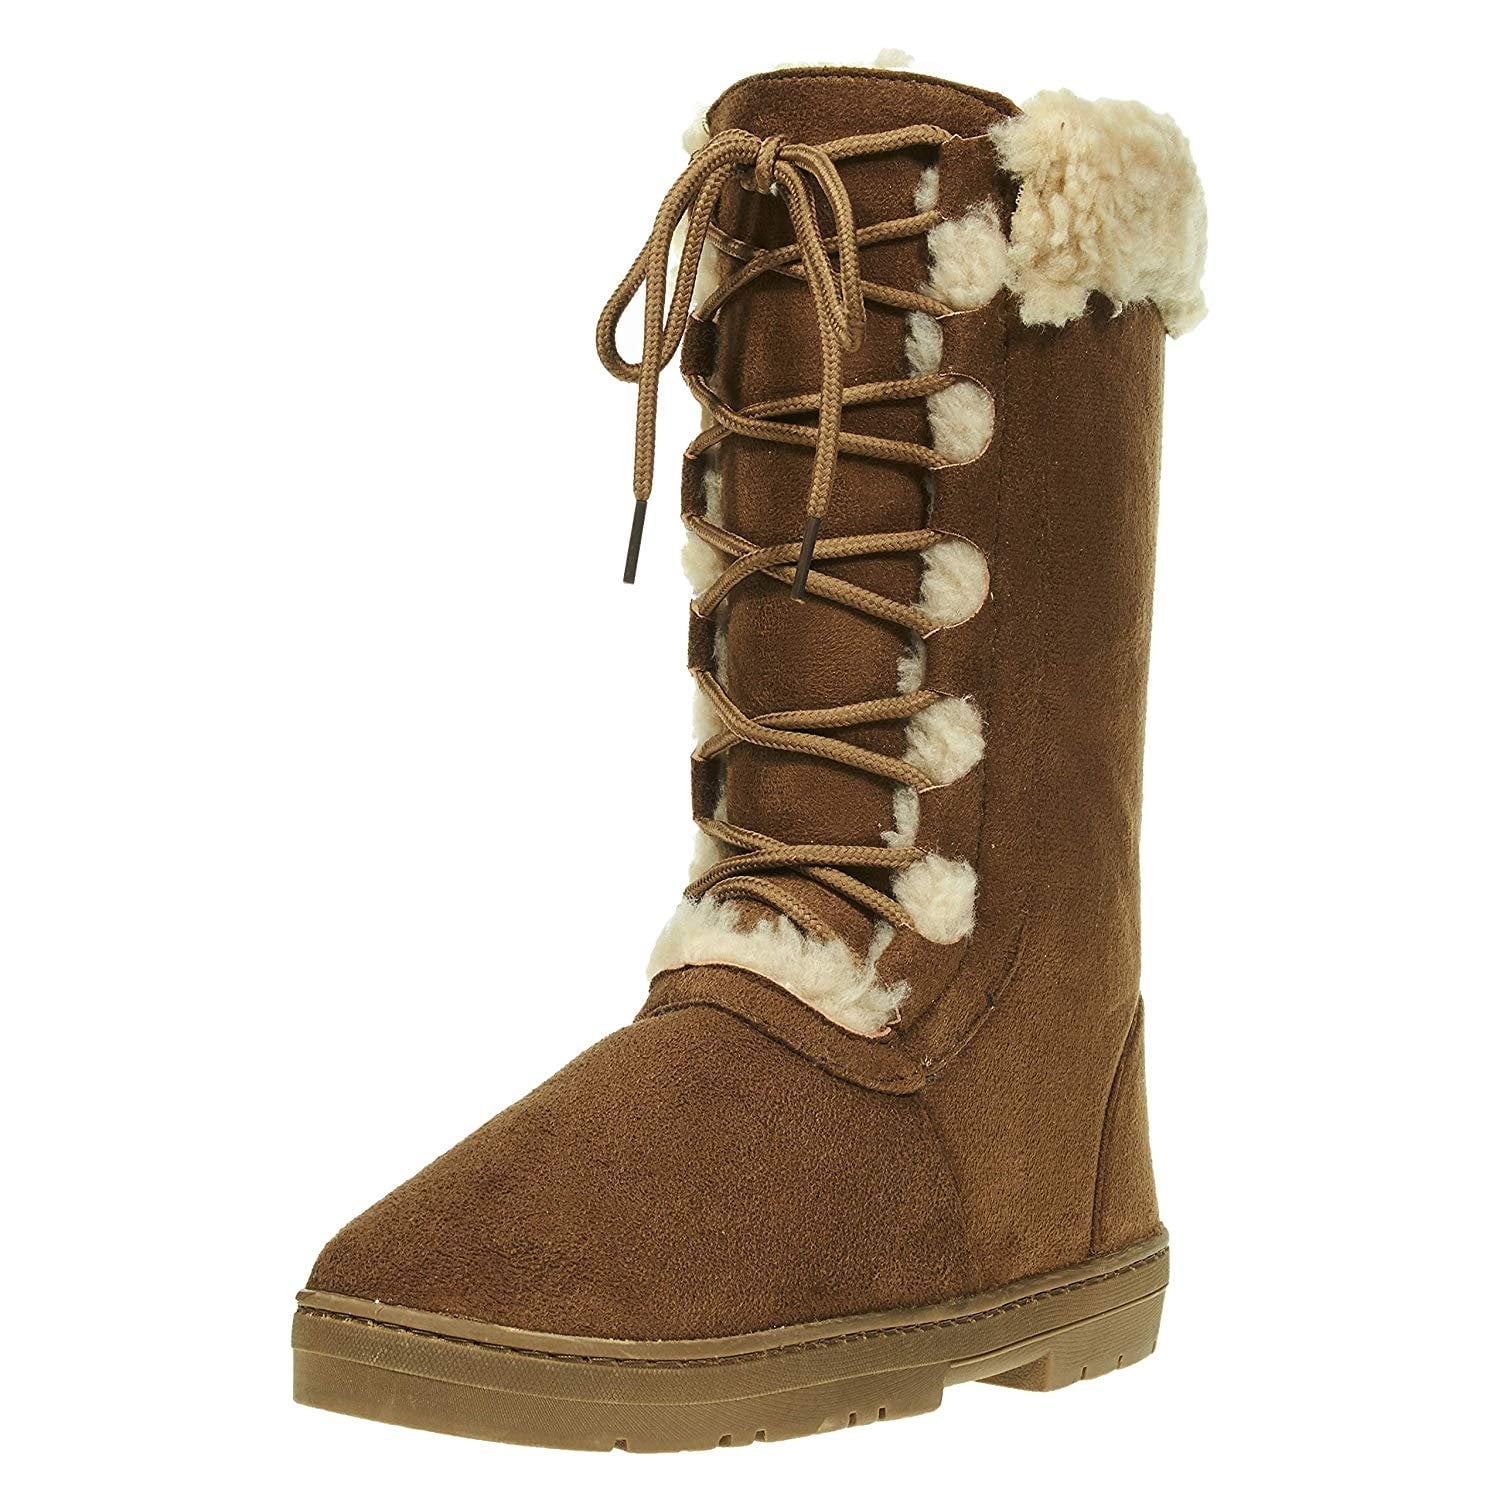 women's winter boots size 11